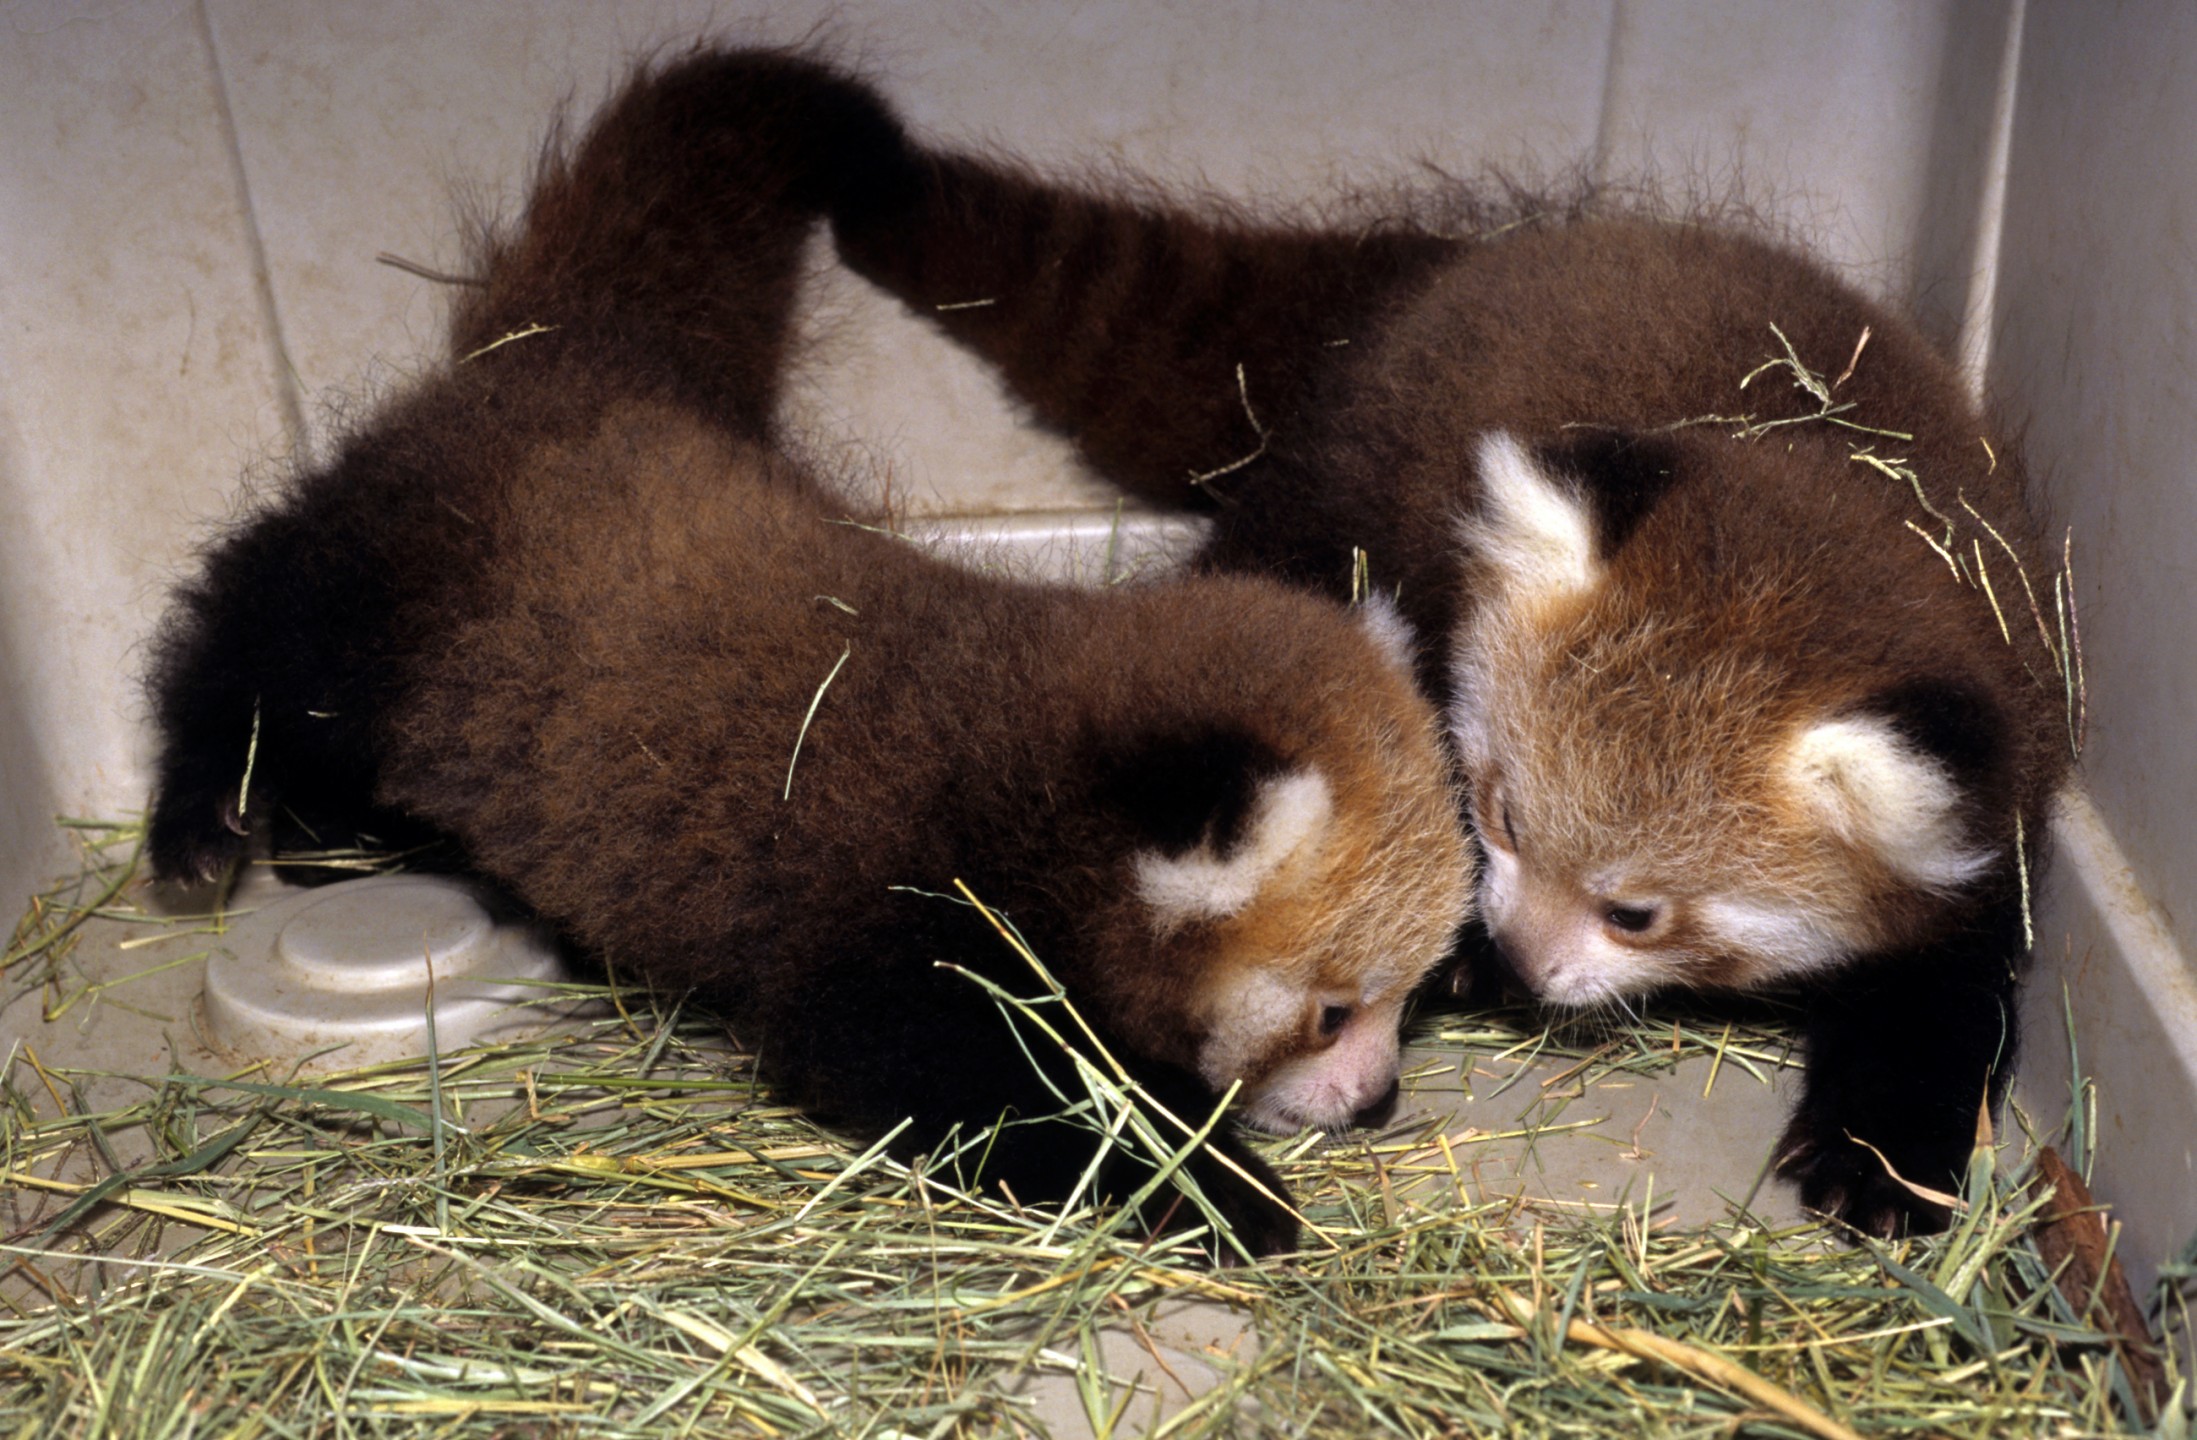 Red panda cubs